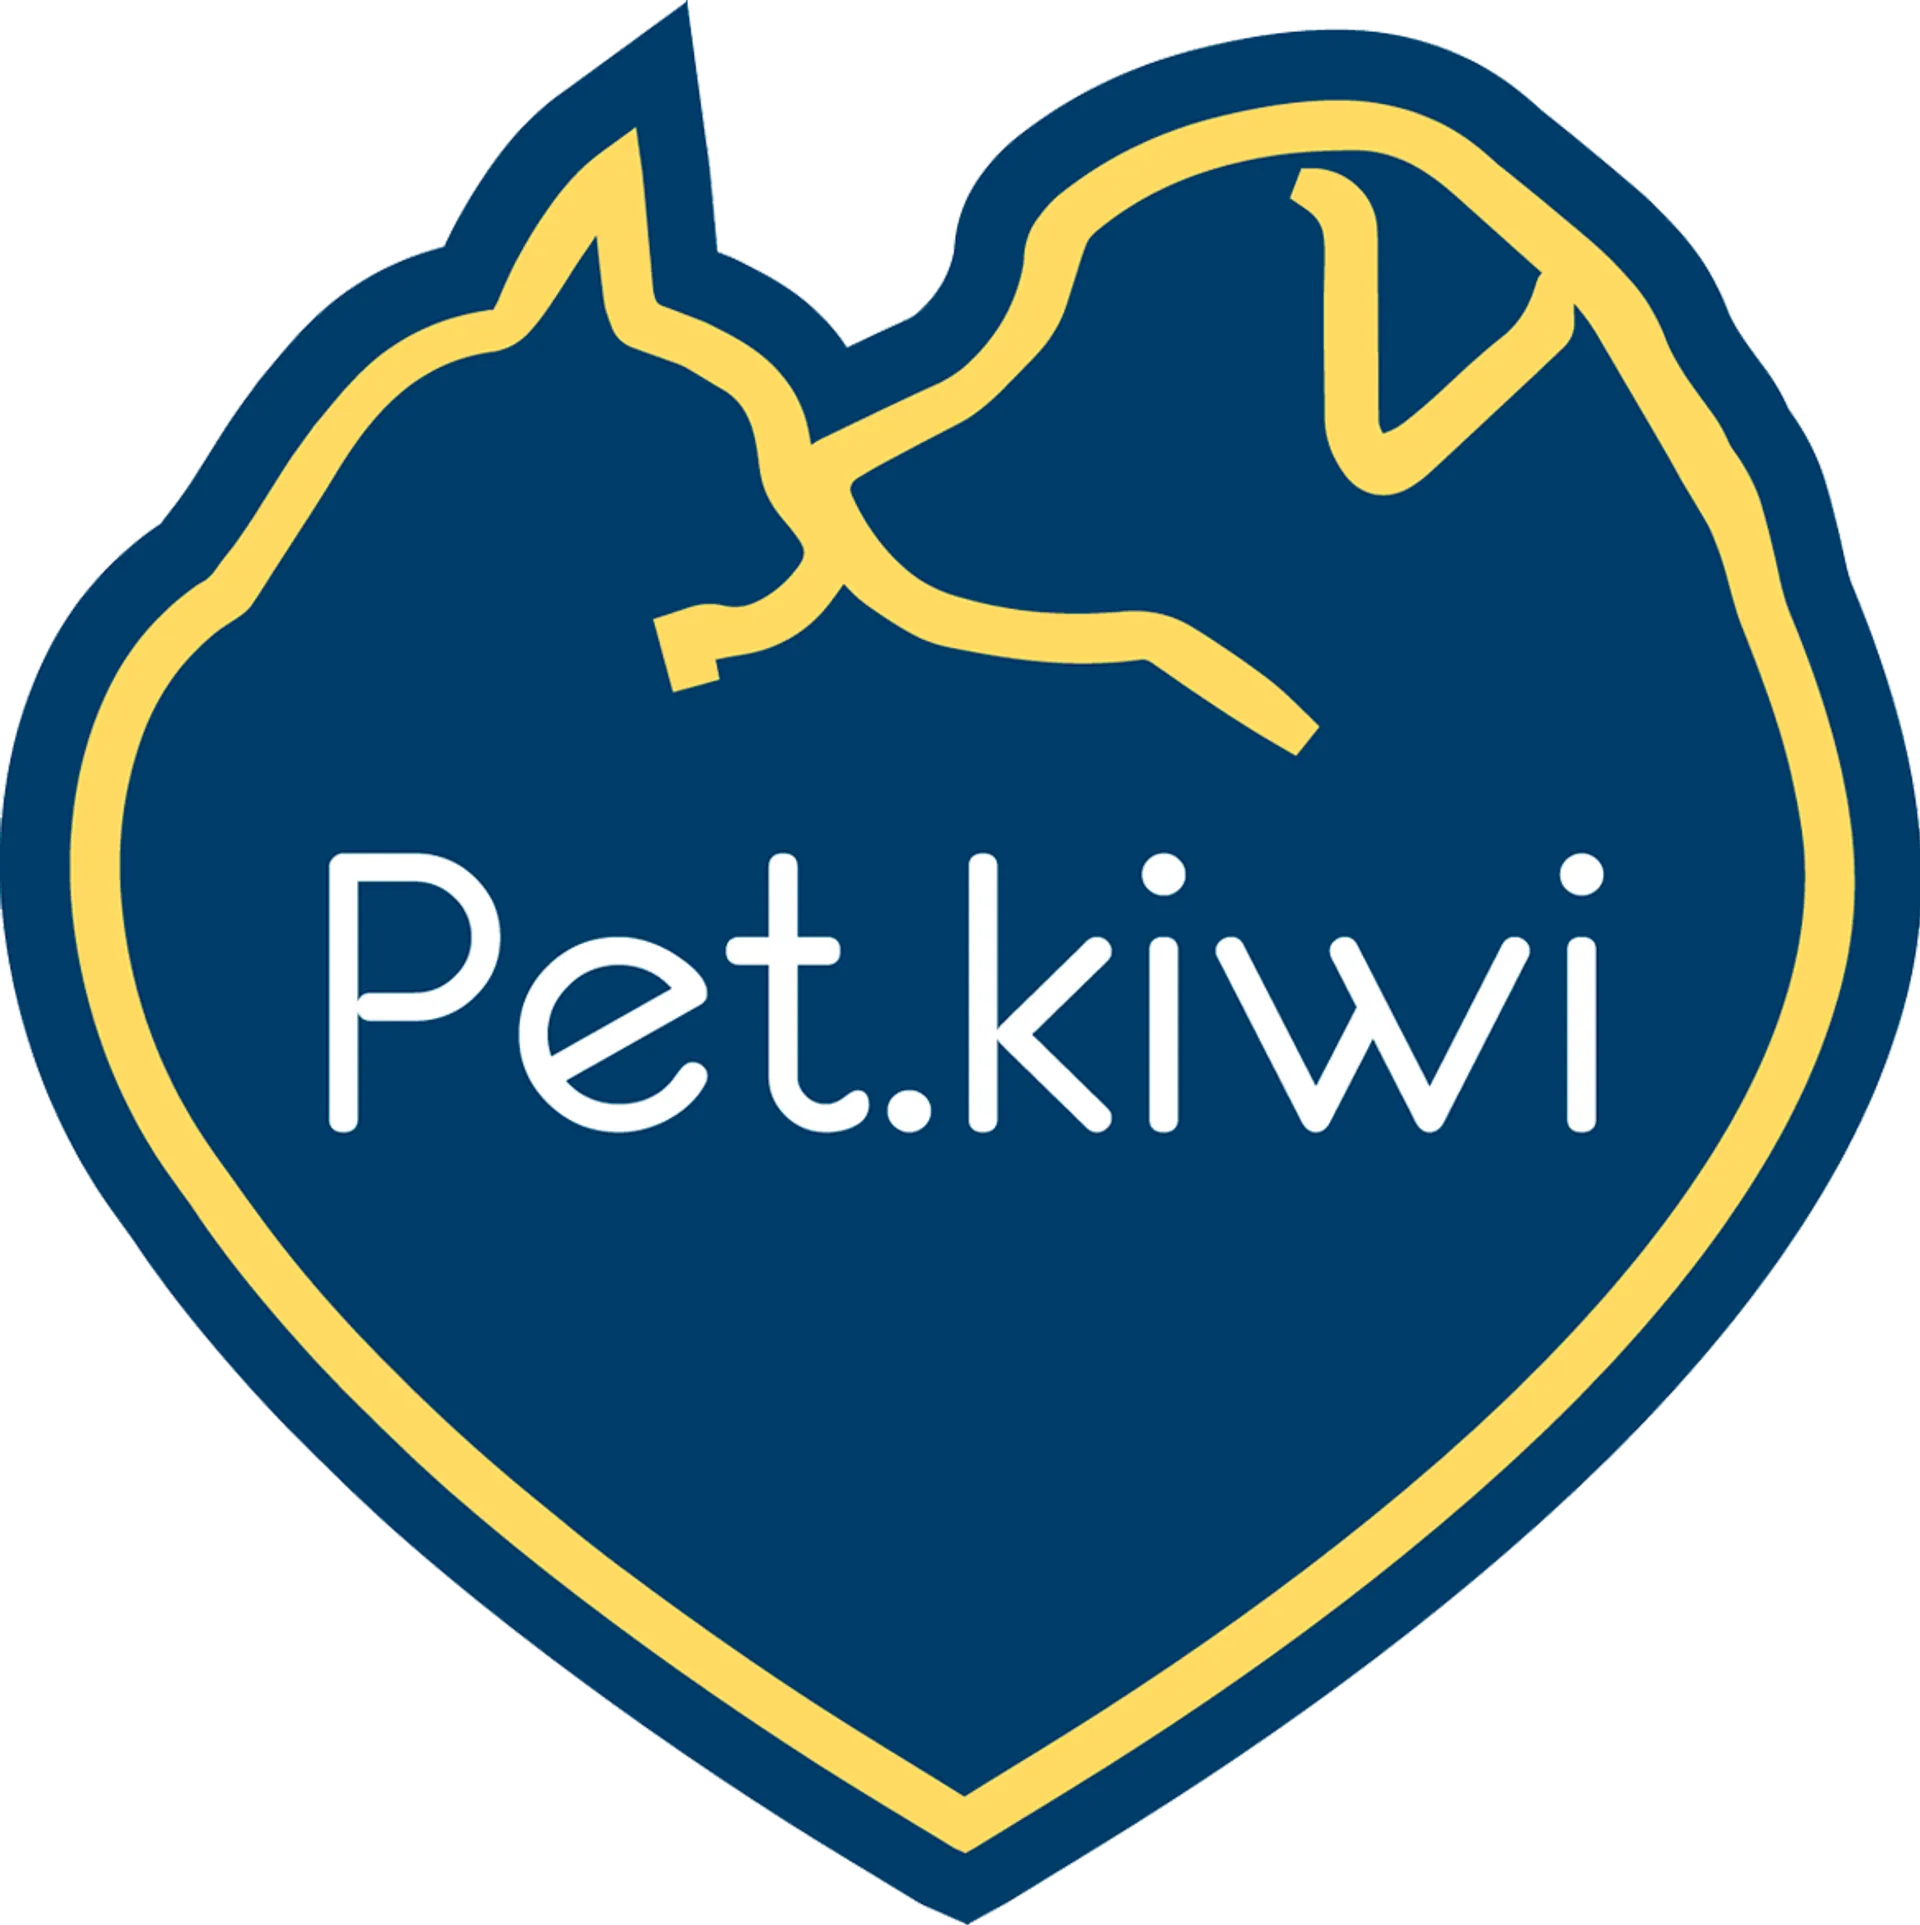 PET KIWI logo current weekly ad